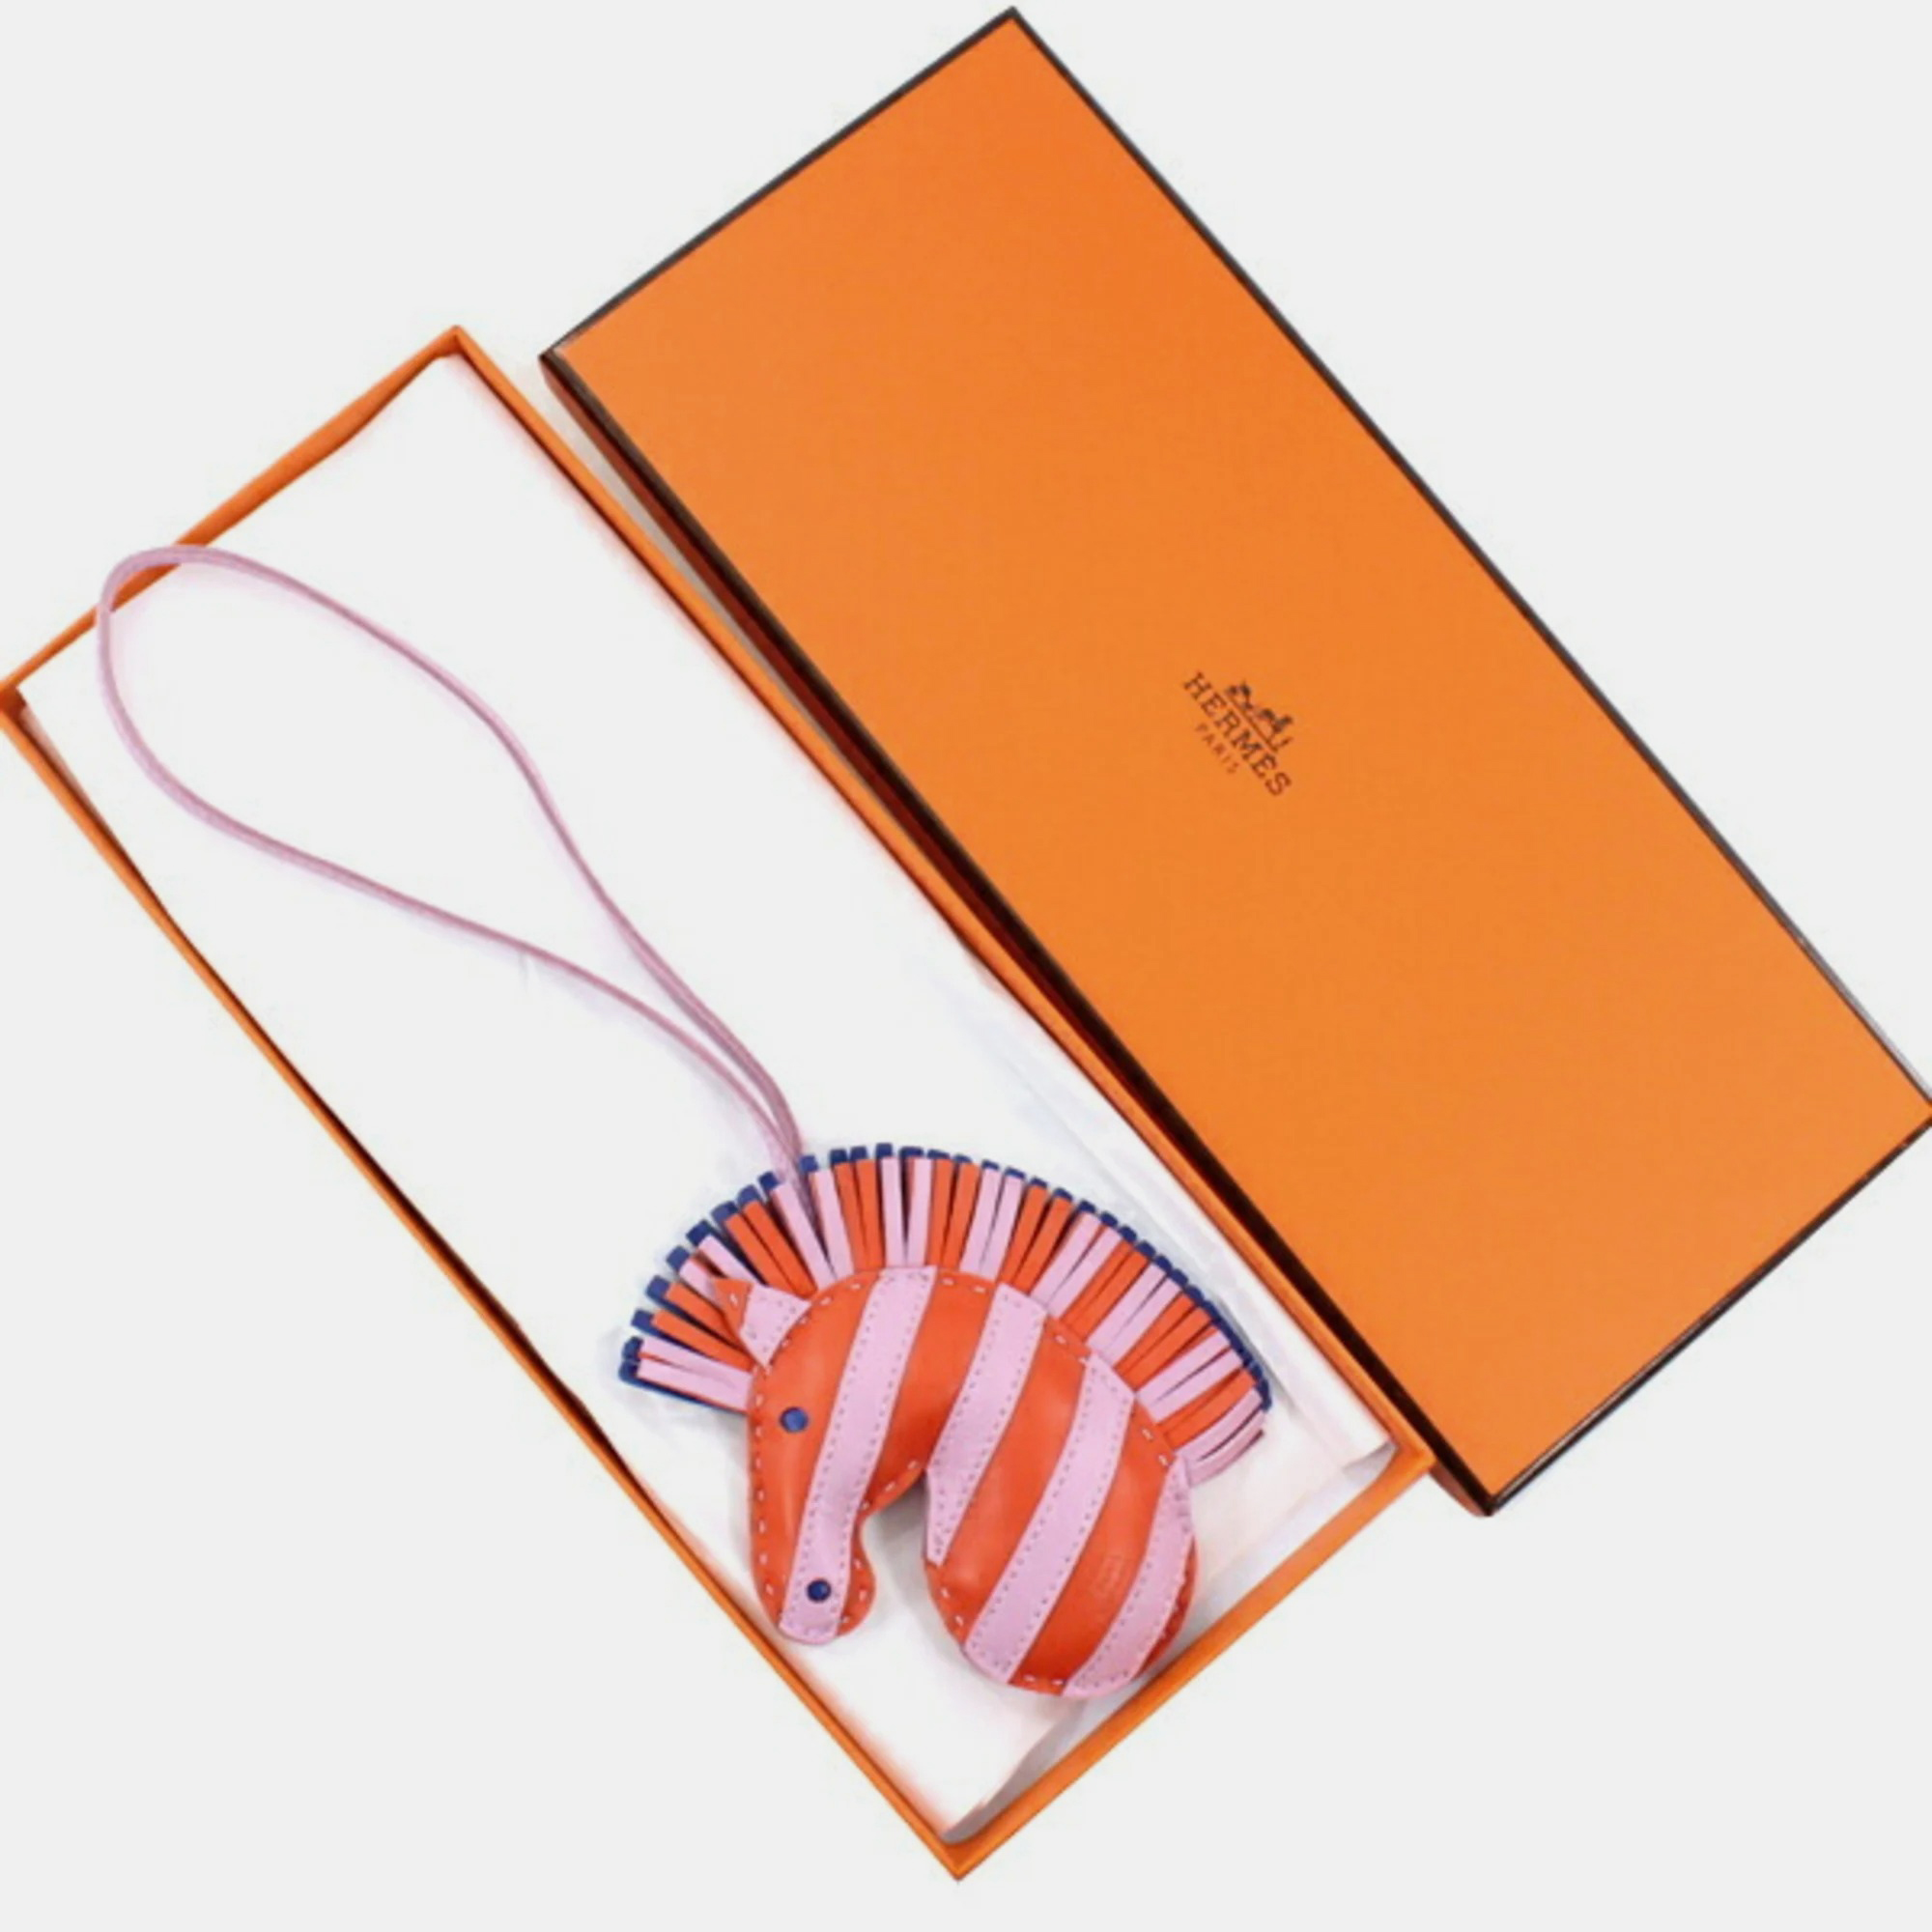 Hermes Jeezy Savannah Bag Charm Orange Poppy Mauve Silvertre Blue Franc Shima Zebra Birkin Kelly Picotin Z Engraved Leather